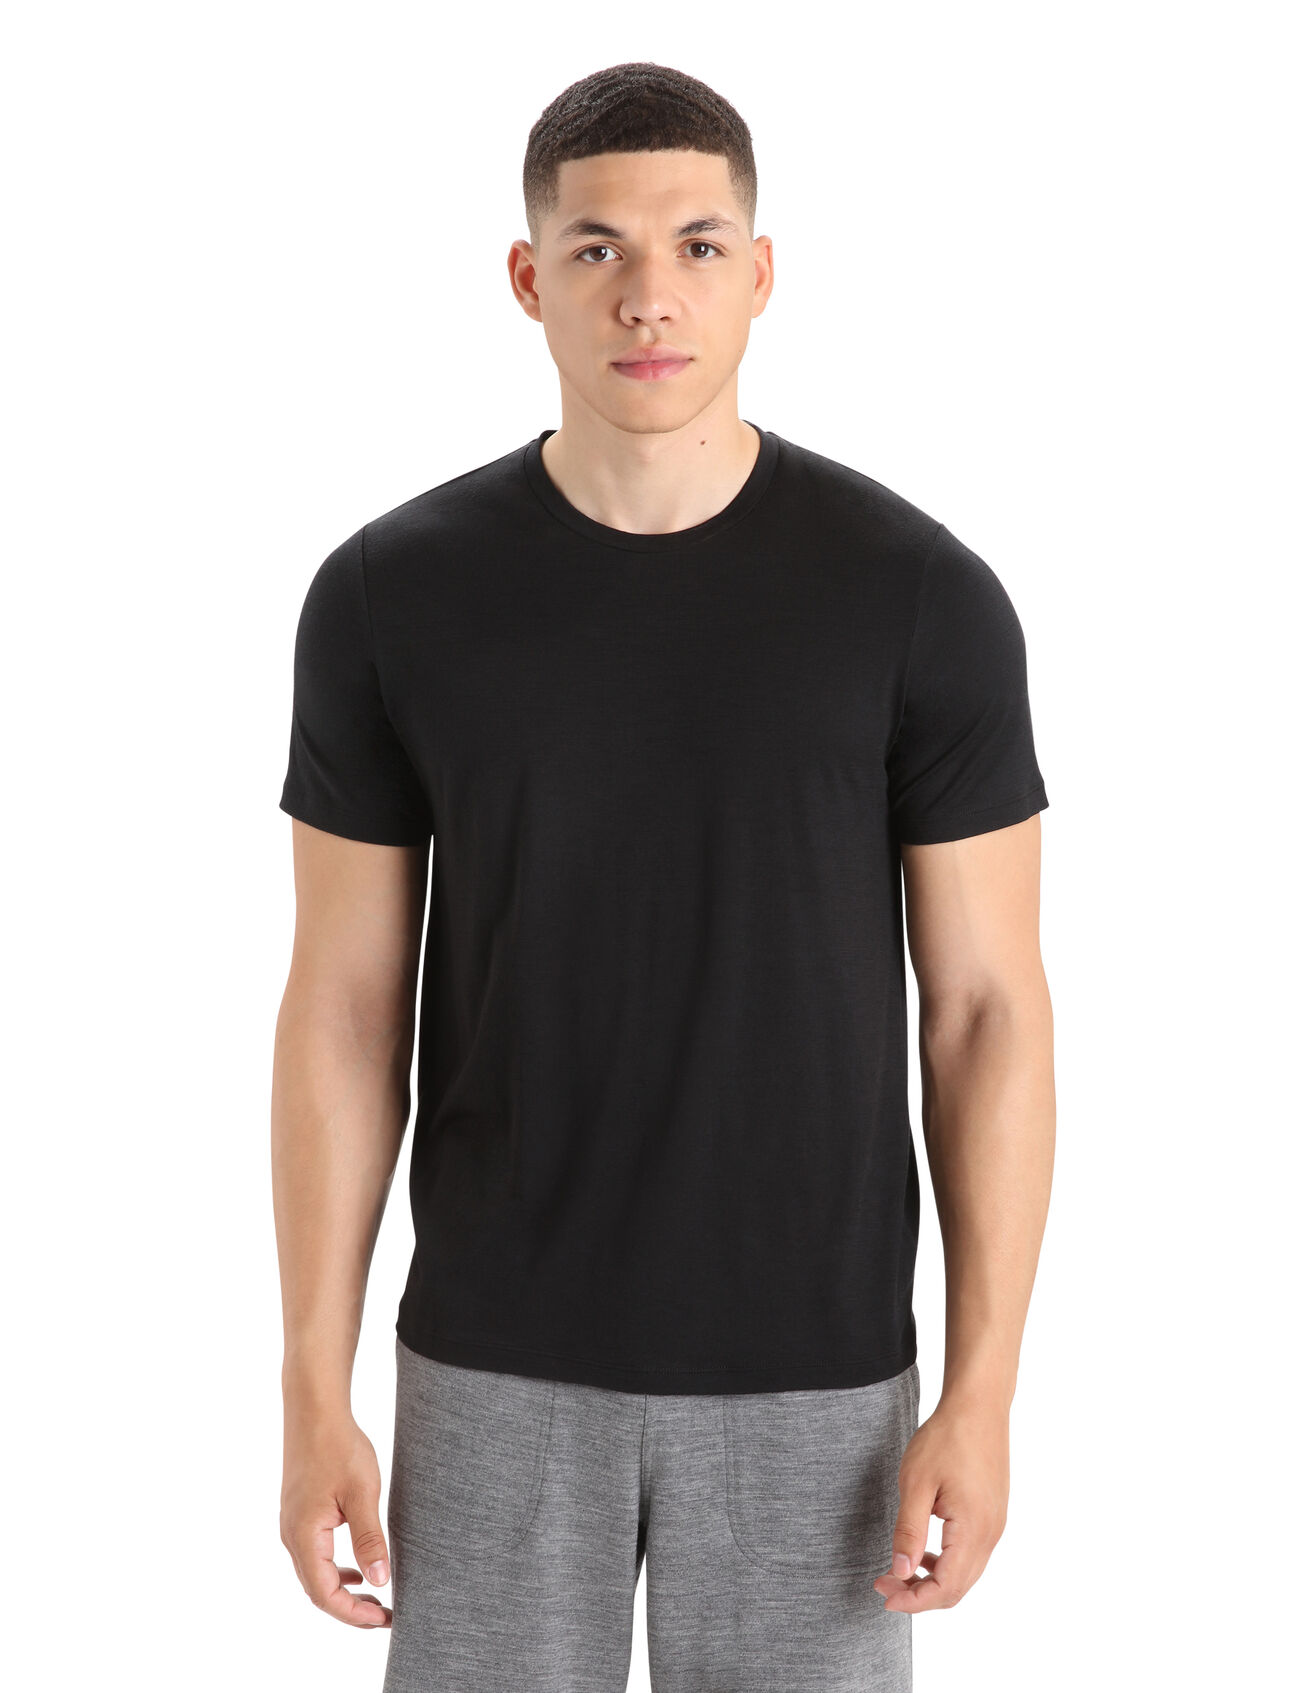 Merino Tech Lite II Short Sleeve T-Shirt